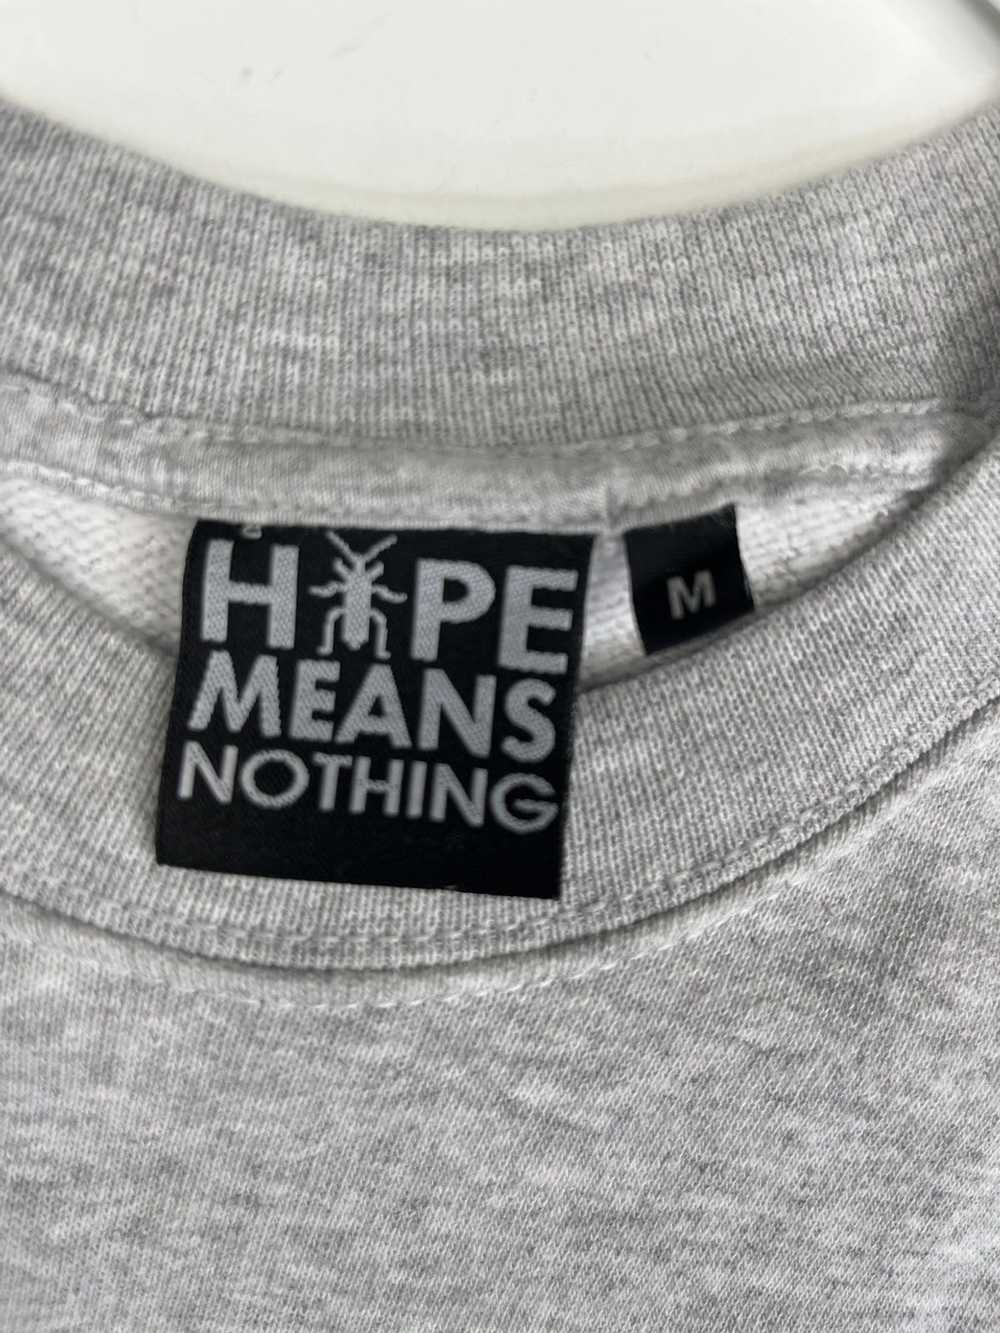 Hype Means Nothing Lil Wayne Ray-ban Sweatshirt - image 4